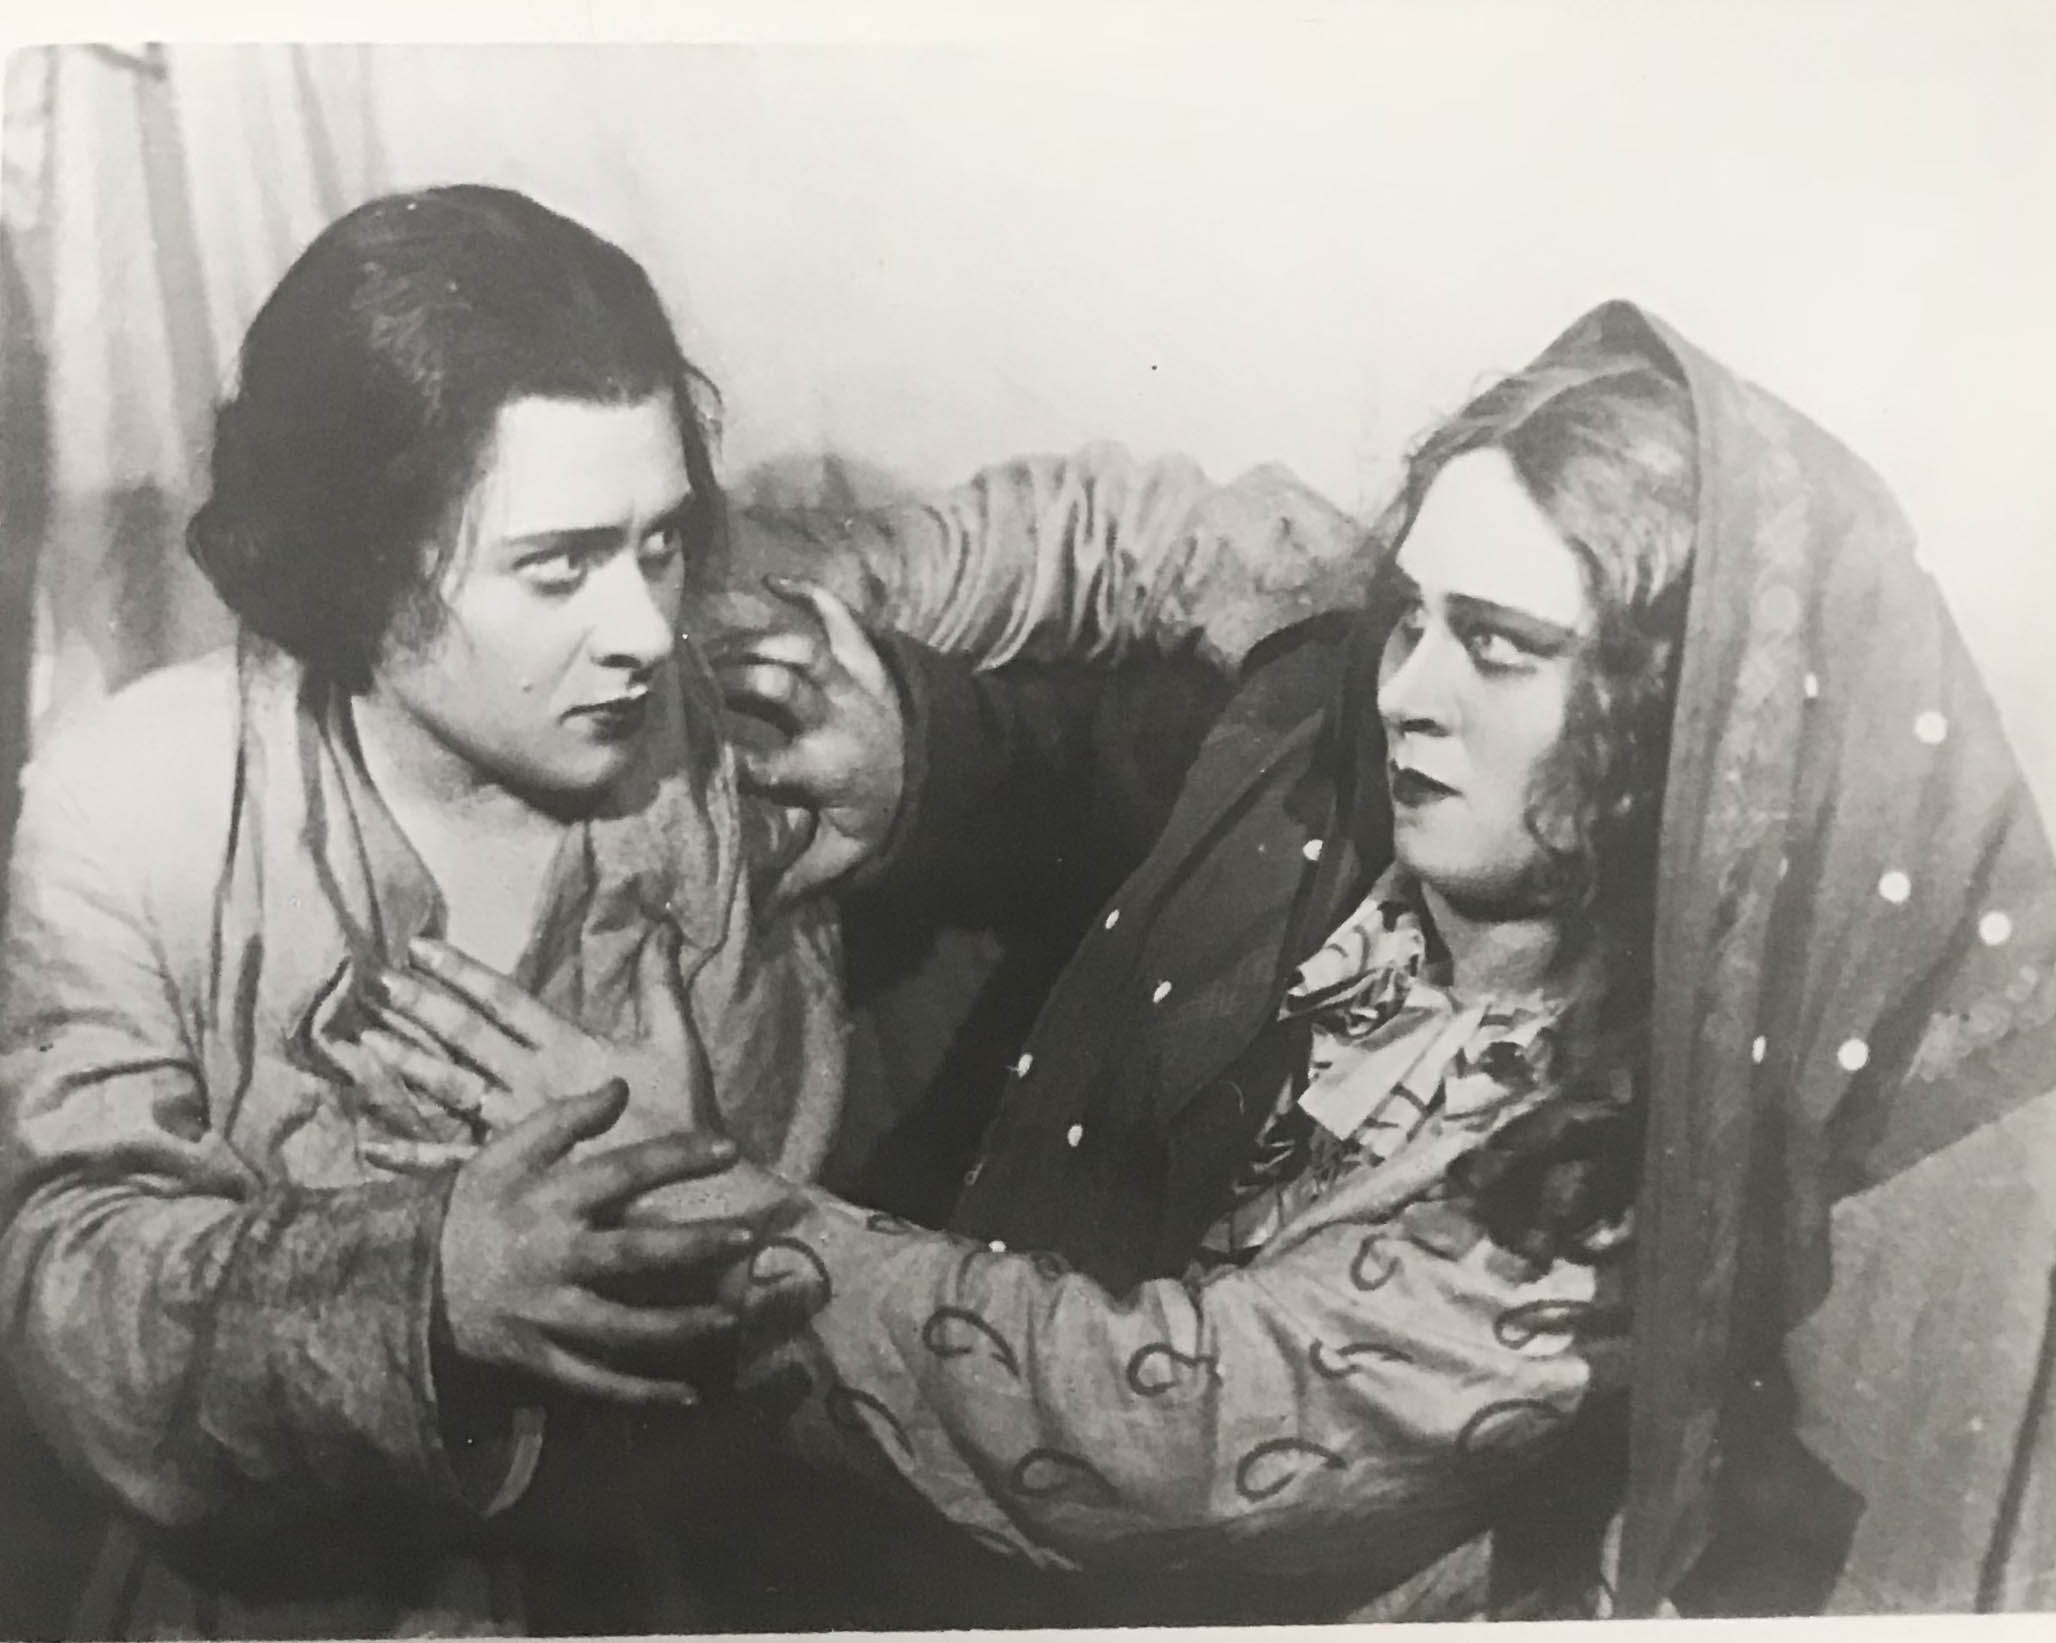 Photograph of Act IV, scene 9 of original Leningrad production of Lady Macbeth of Mtsensk.